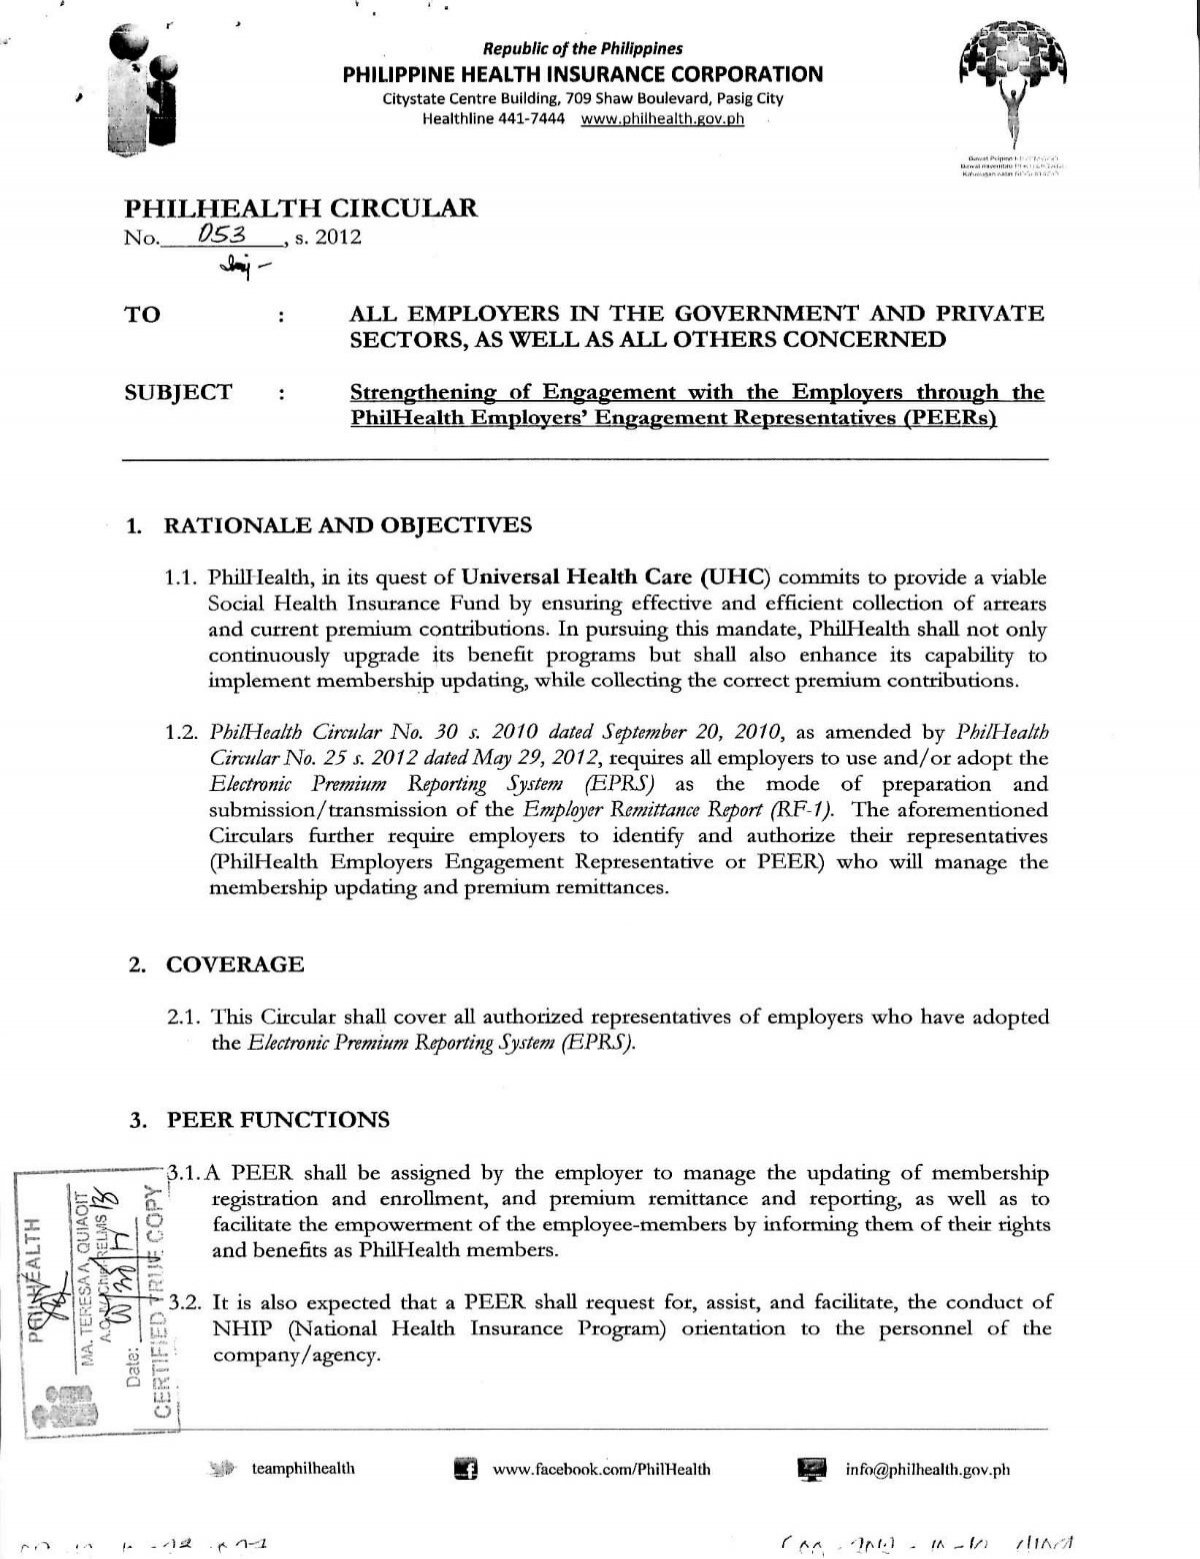 philhealth-circular-philippine-health-insurance-corporation